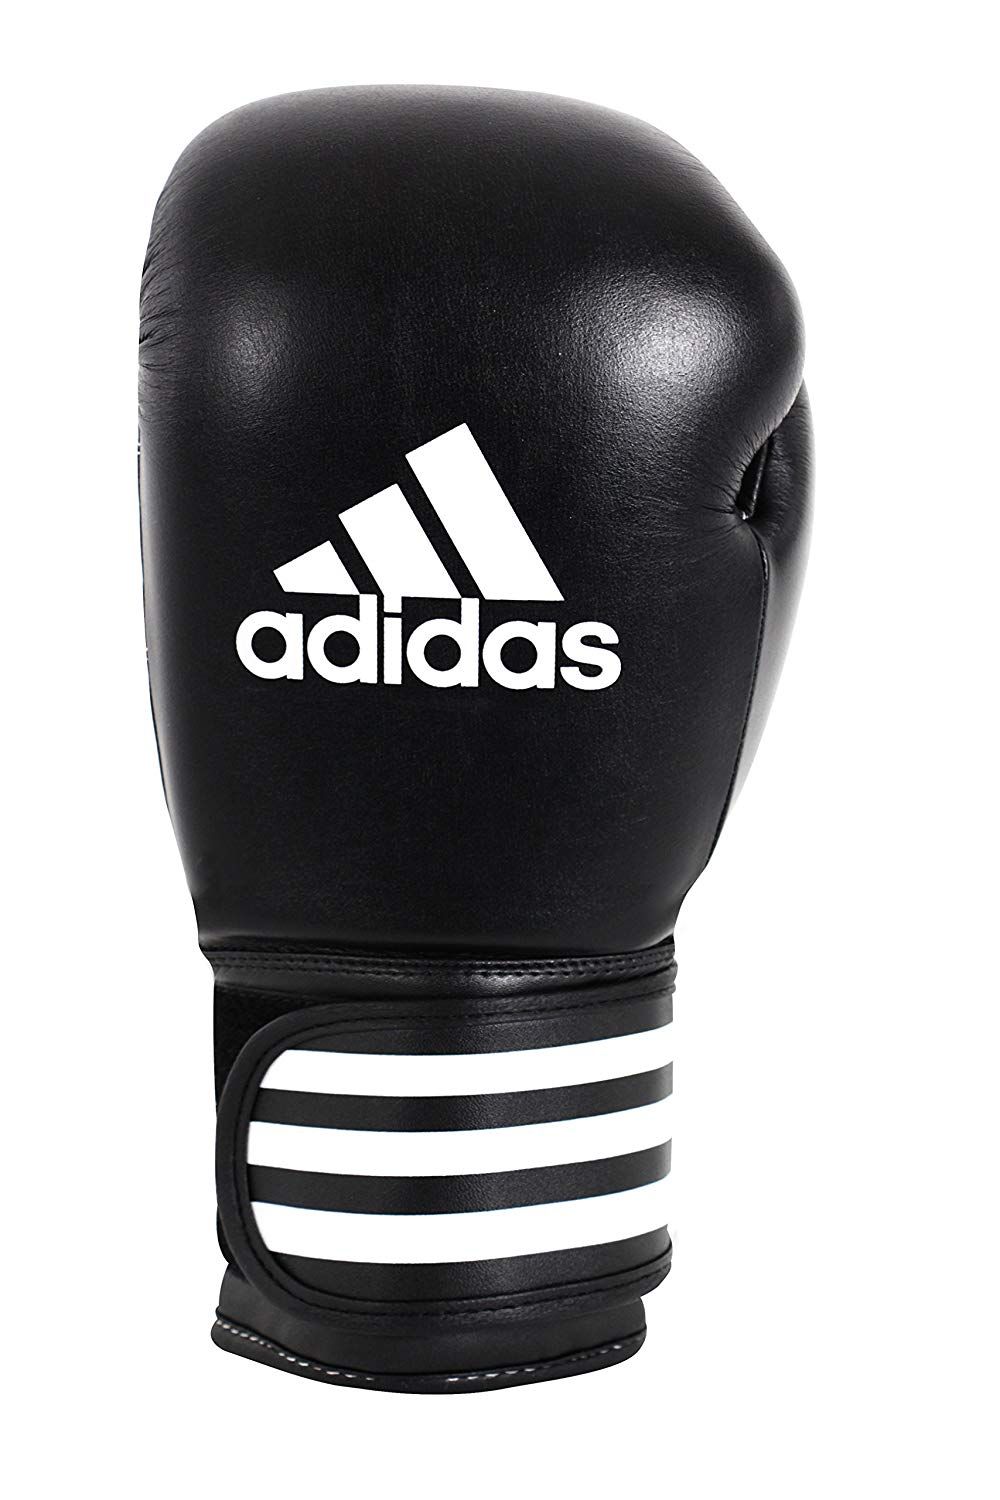 adidas 2 boxing gloves